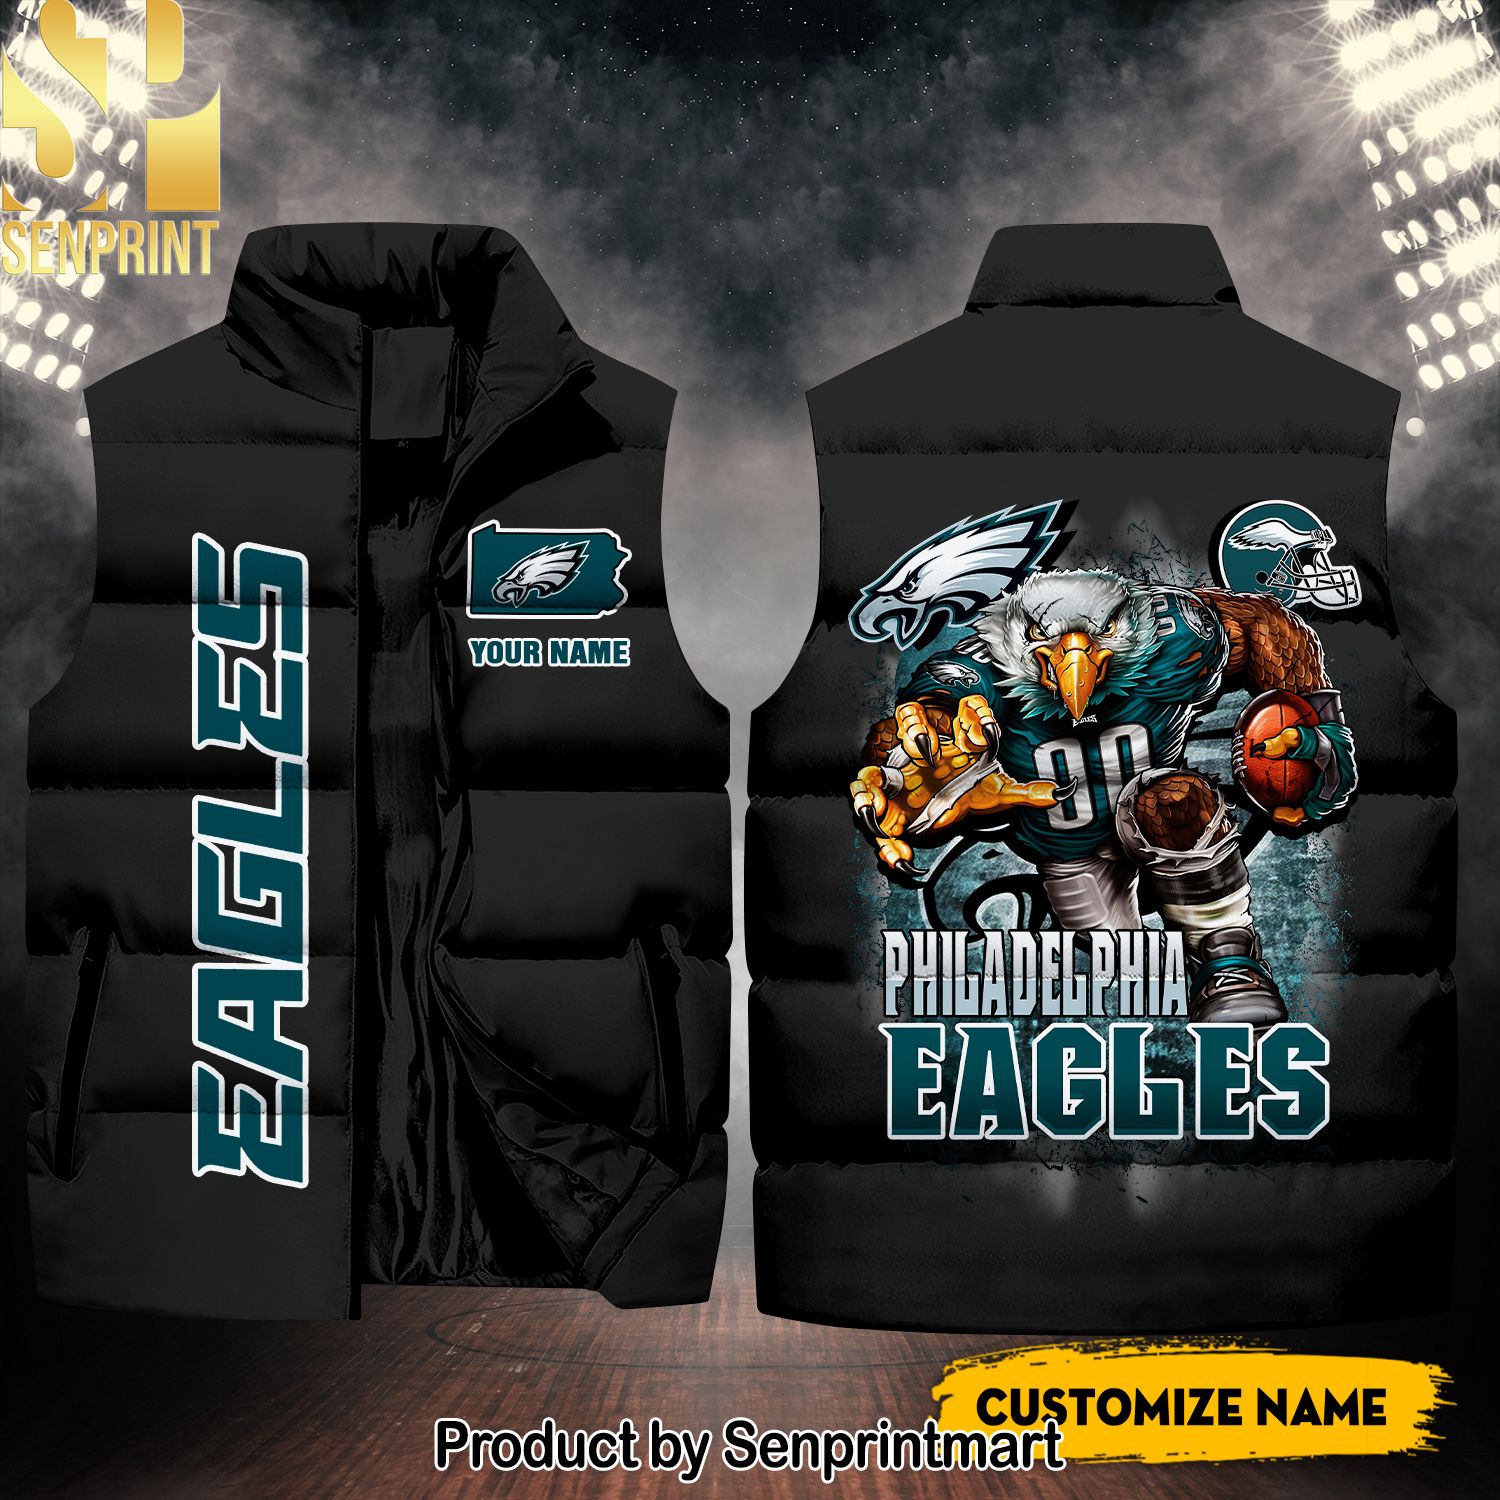 National Football League Philadelphia Eagles Personalized Name New Fashion Sleeveless Jacket